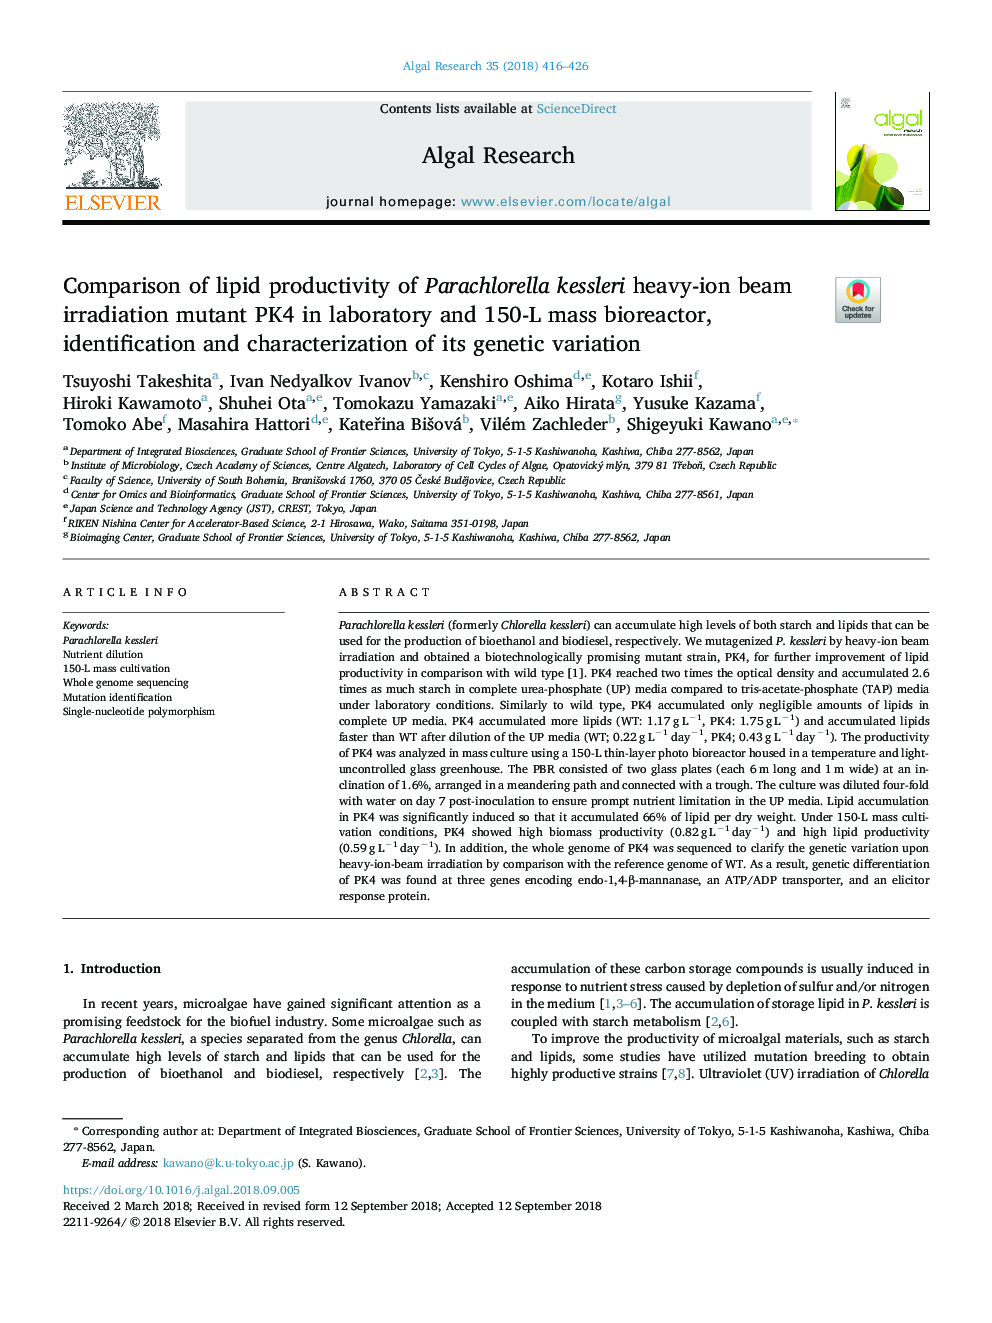 Comparison of lipid productivity of Parachlorella kessleri heavy-ion beam irradiation mutant PK4 in laboratory and 150-L mass bioreactor, identification and characterization of its genetic variation